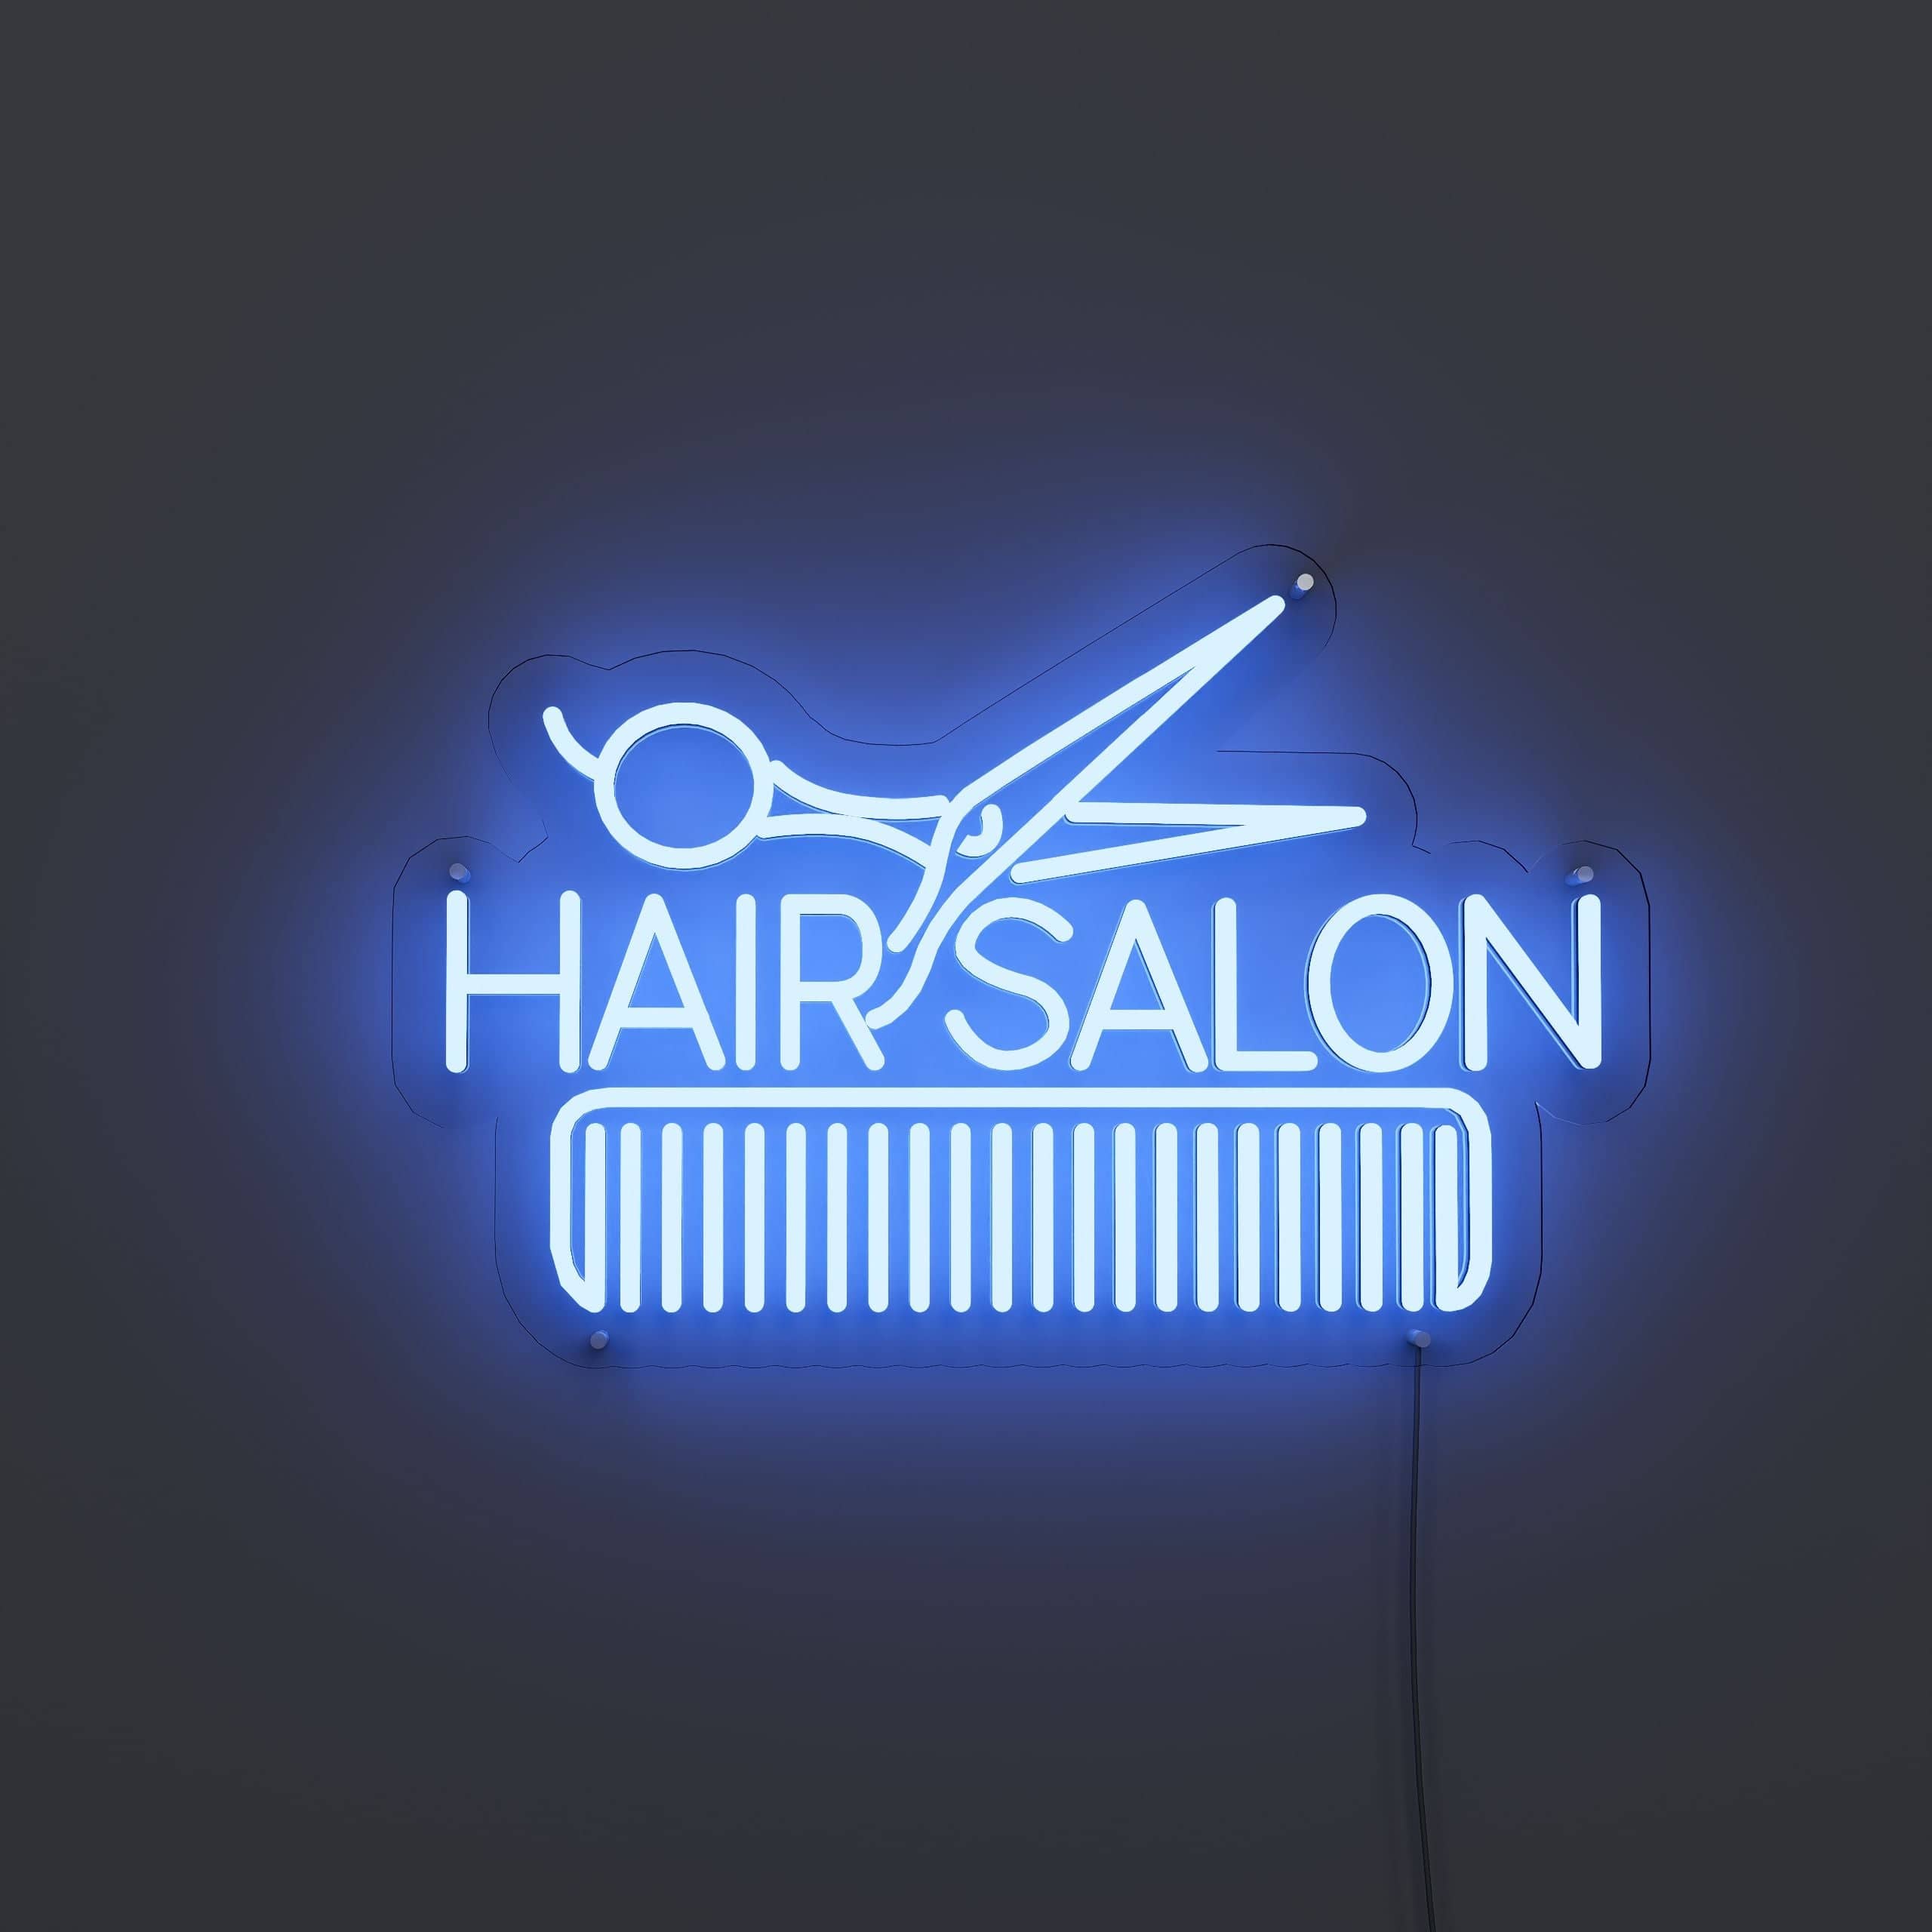 premier-hair-salon-destination-neon-sign-lite